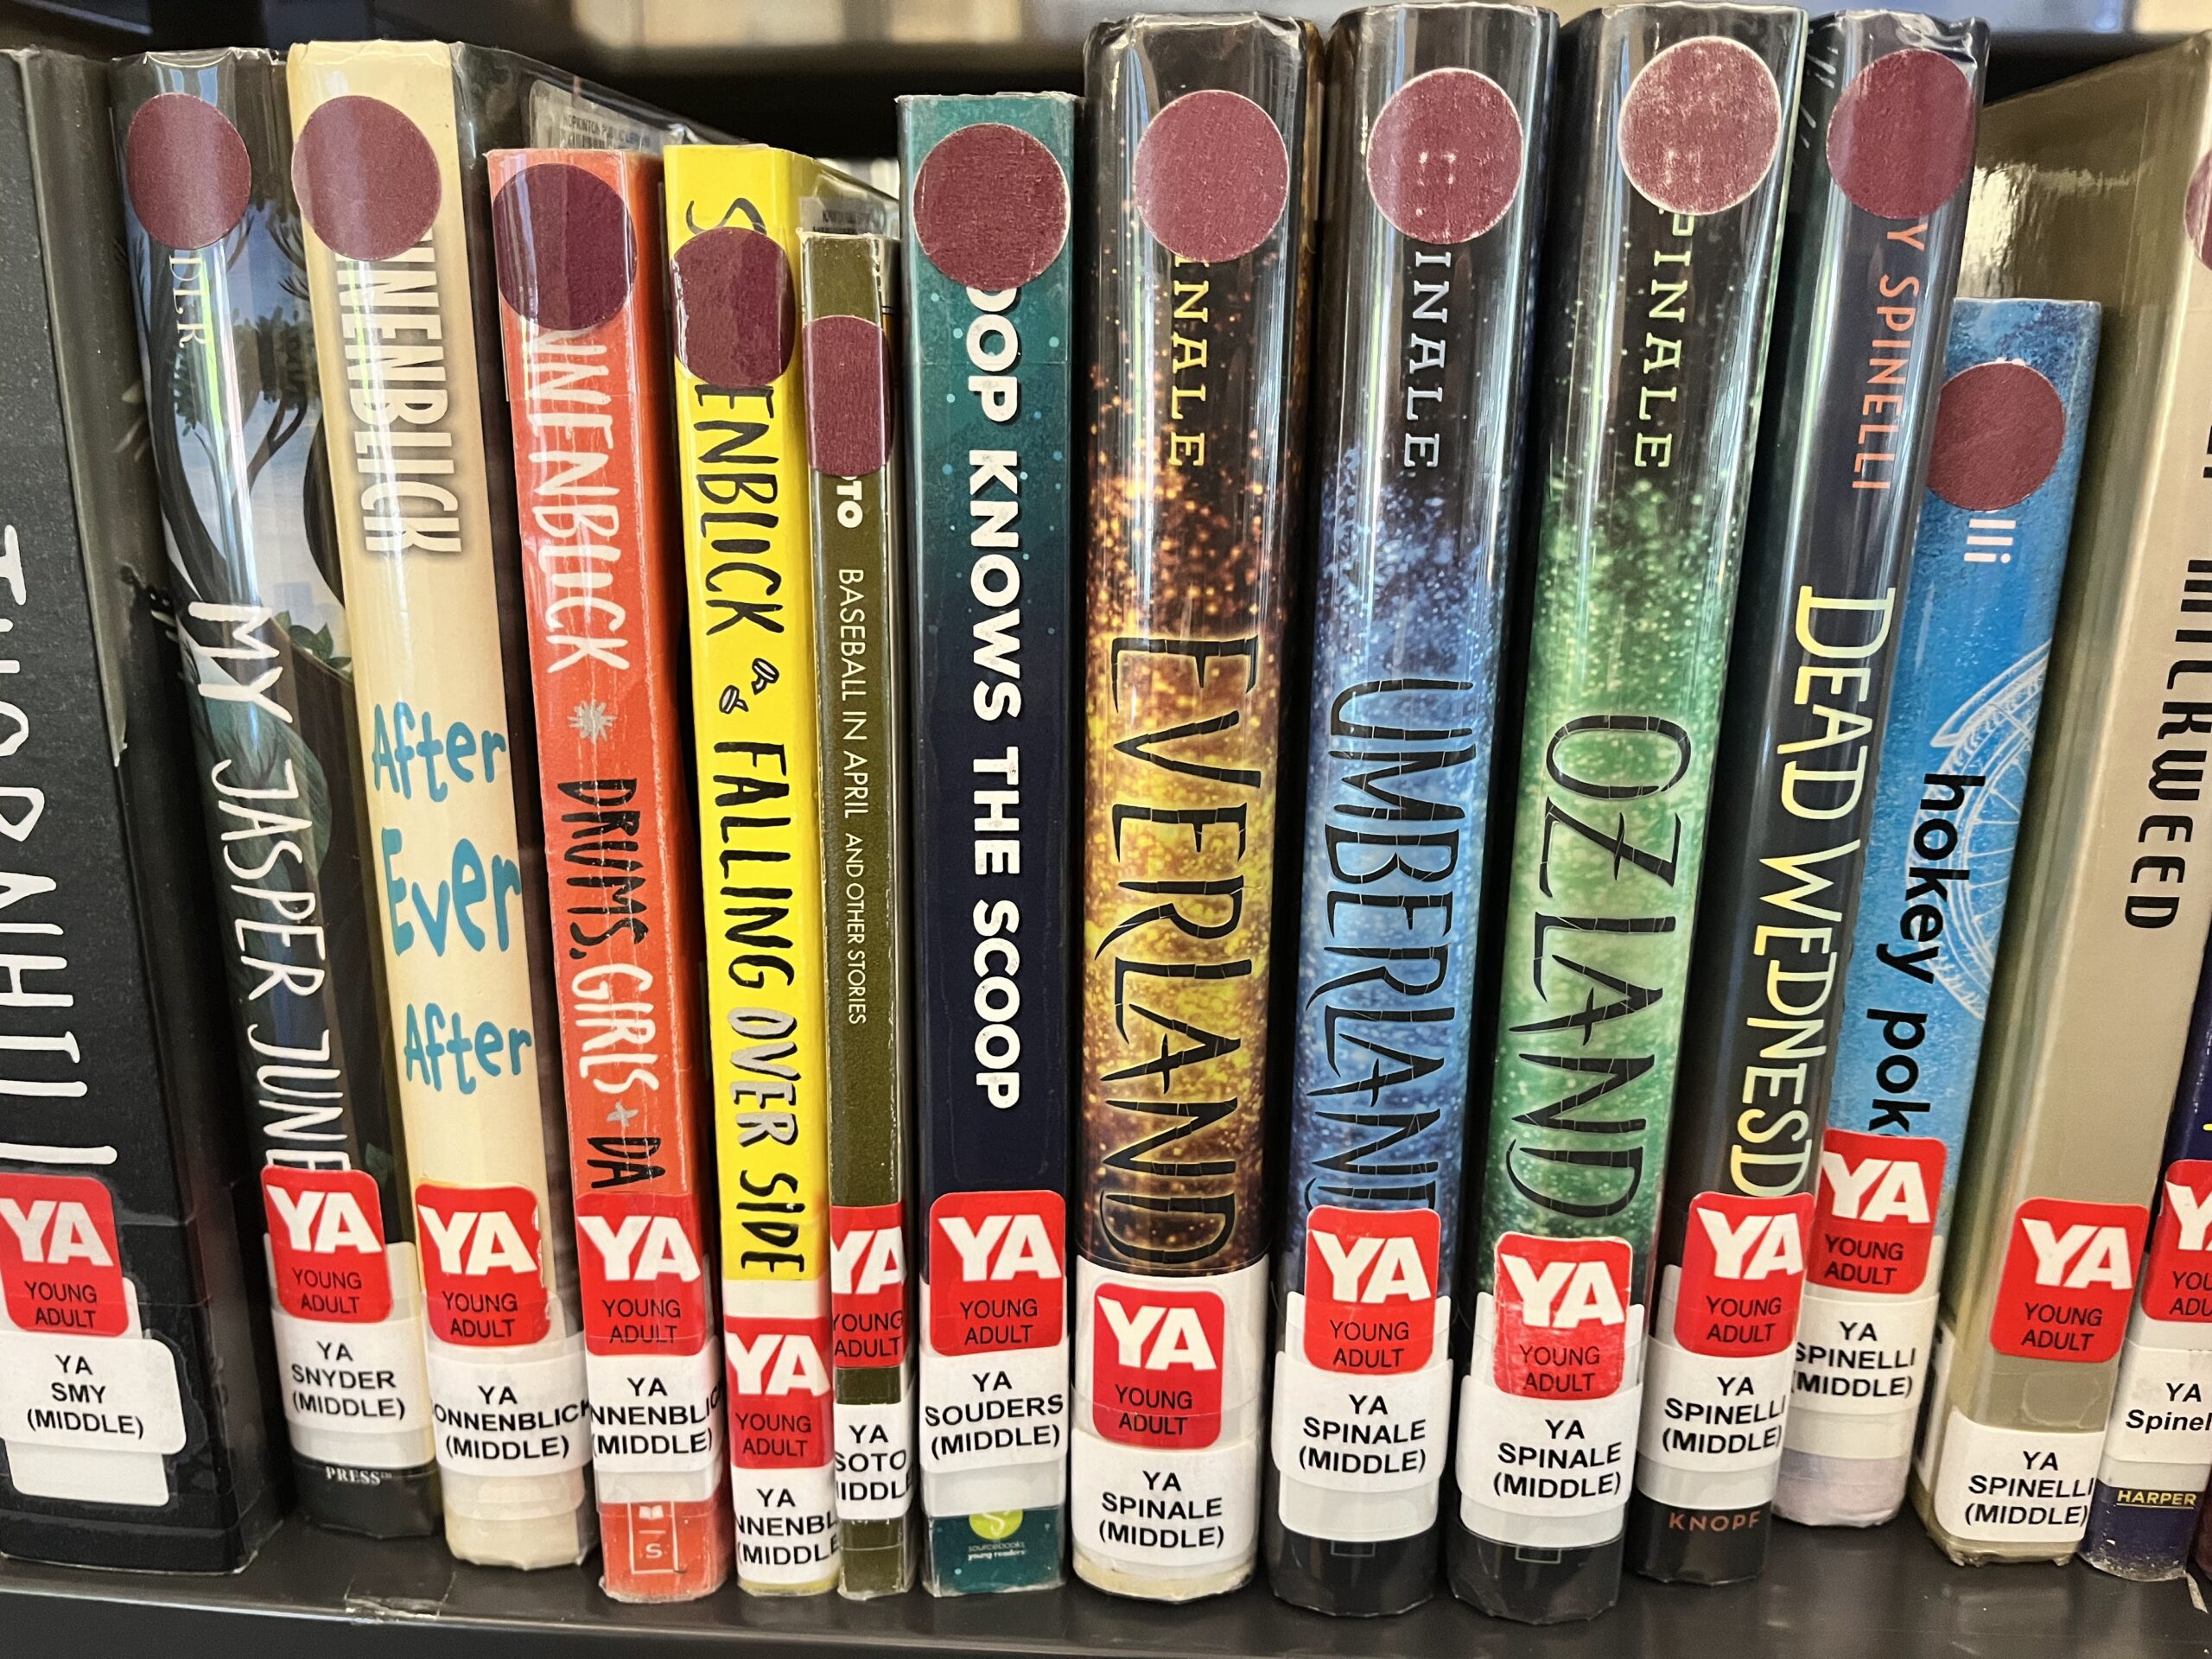 Middle school YA Books on shelf with "purple dot"